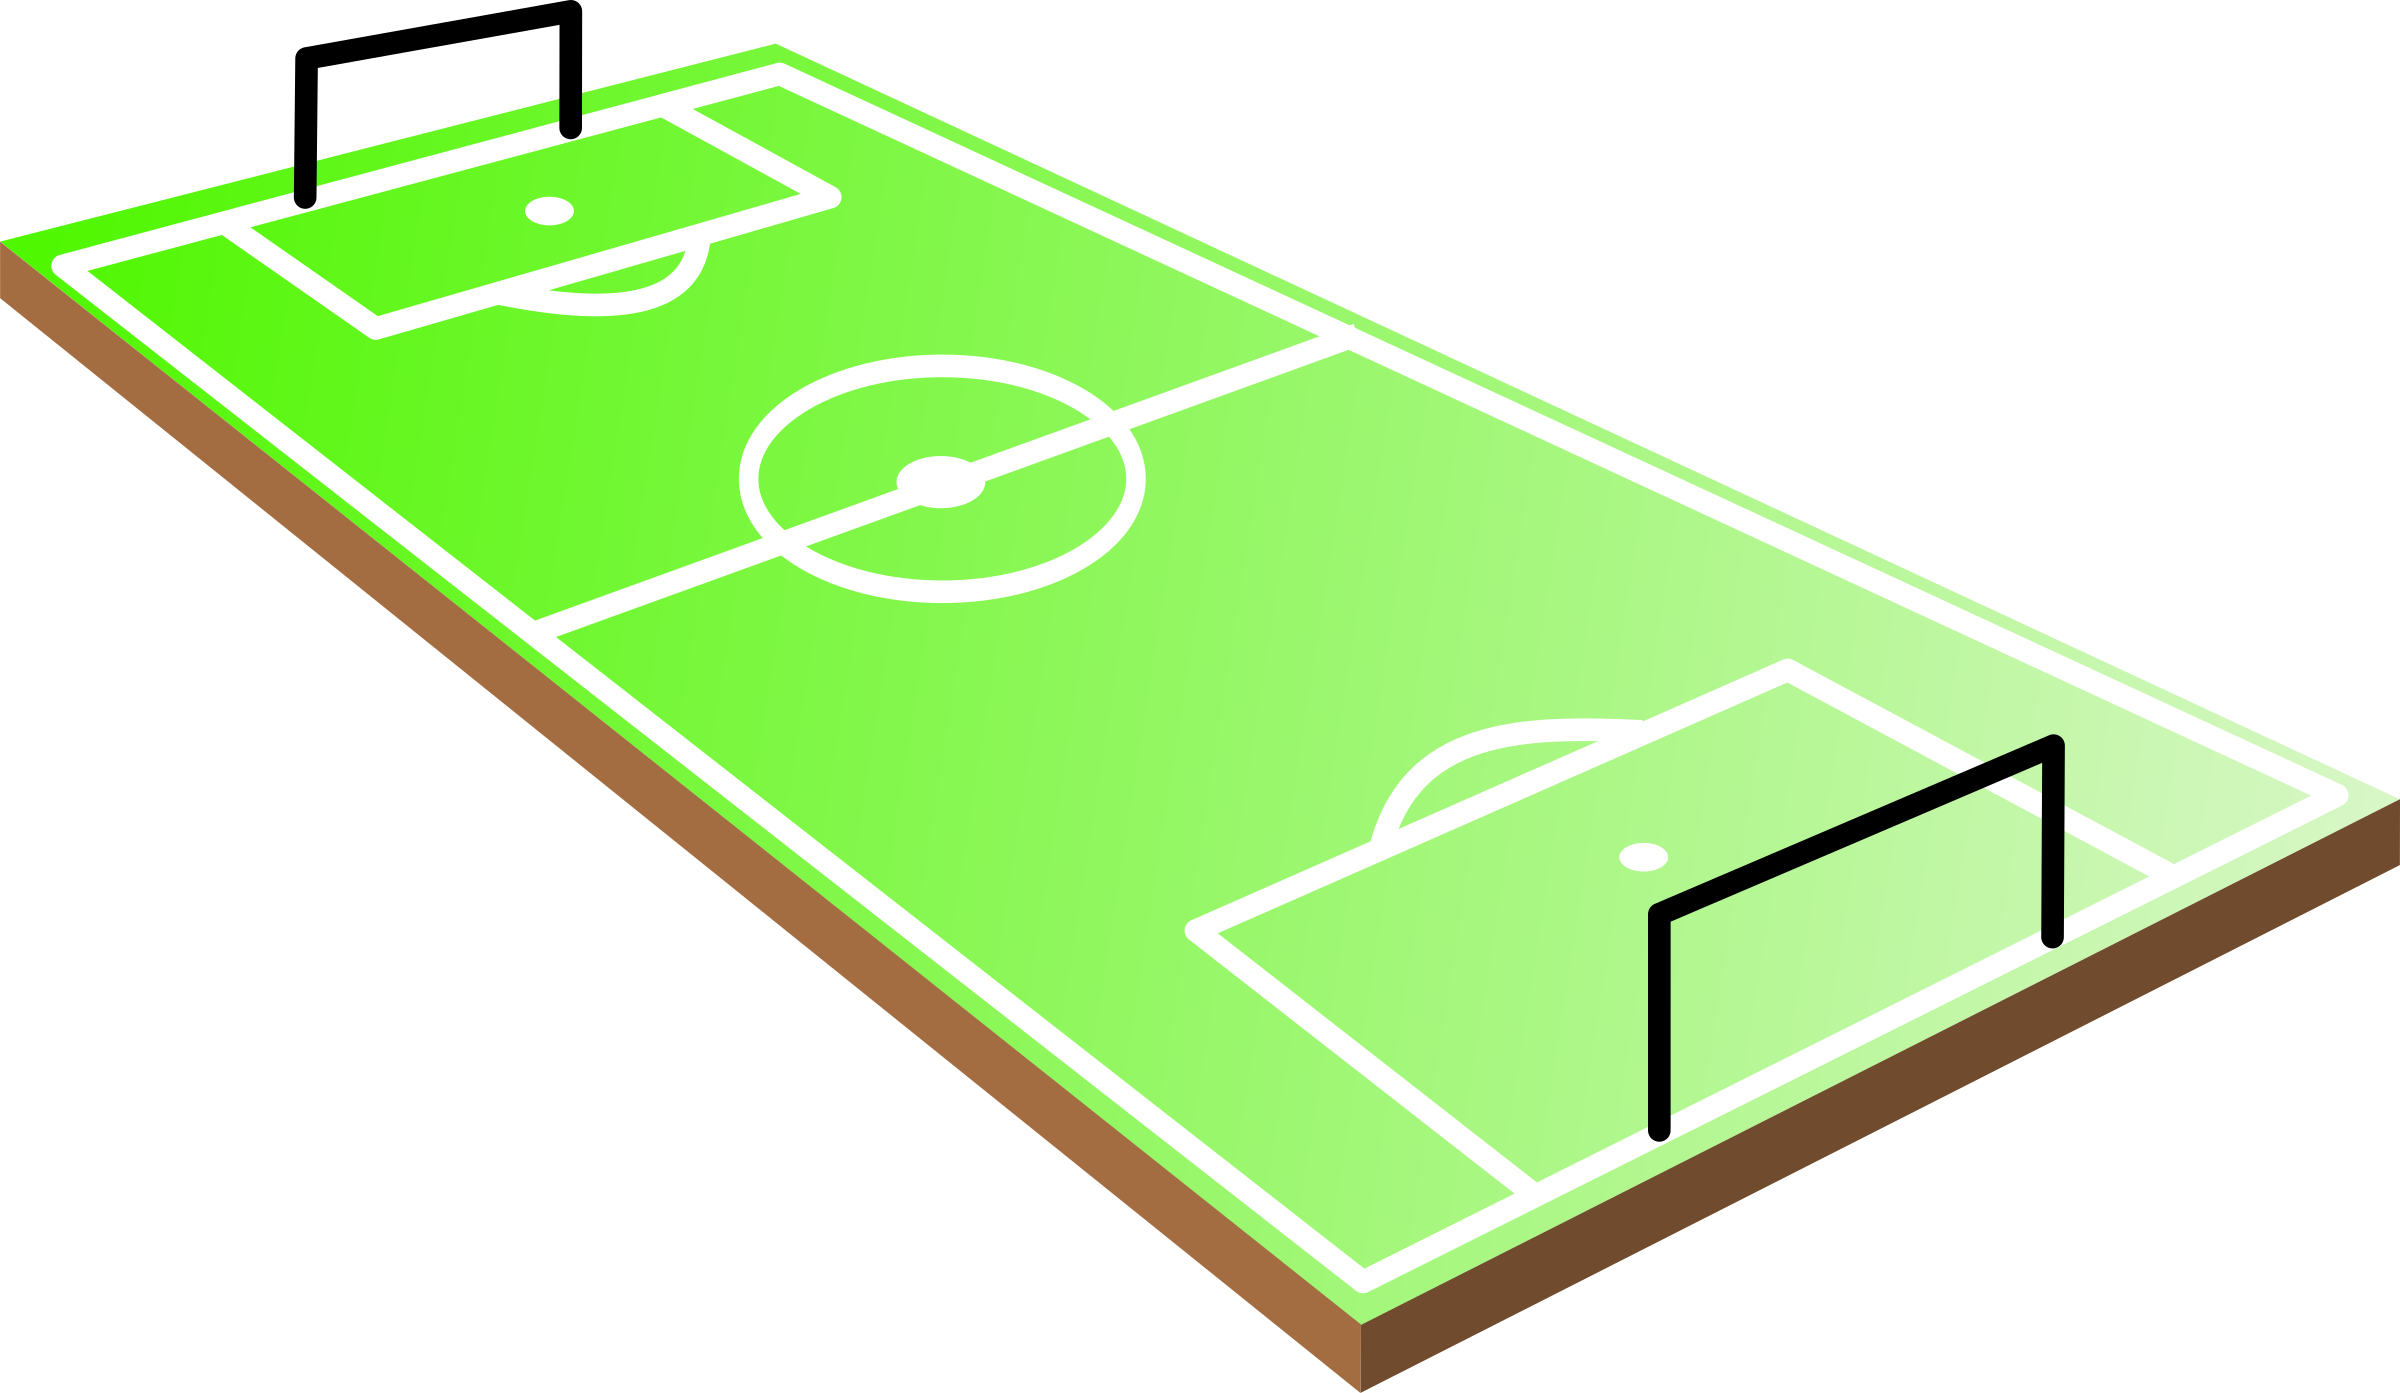 Clipart - Football field